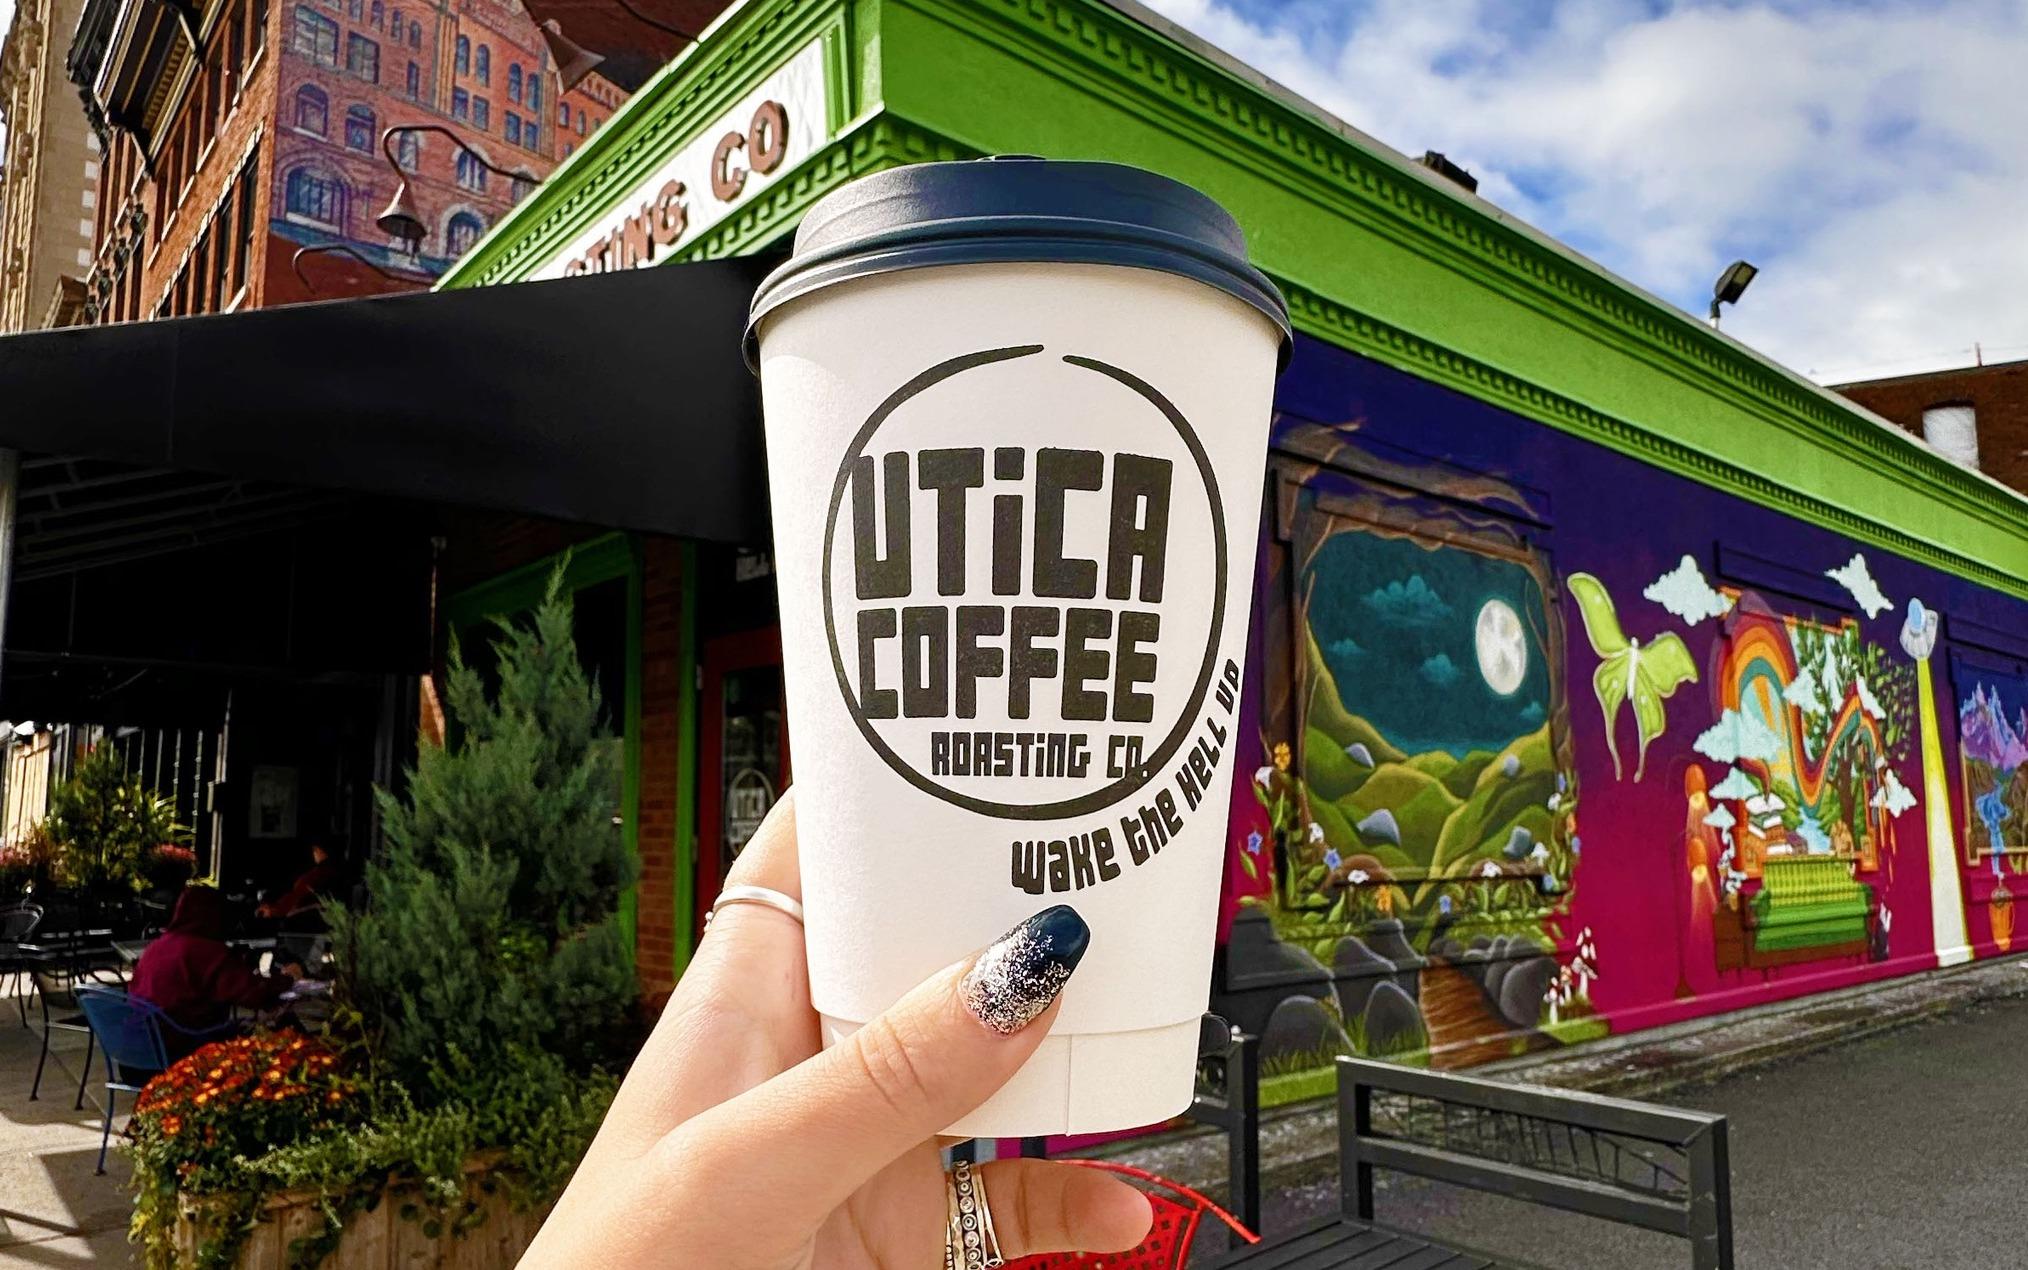 Pet Friendly Utica Coffee Roasting Co.